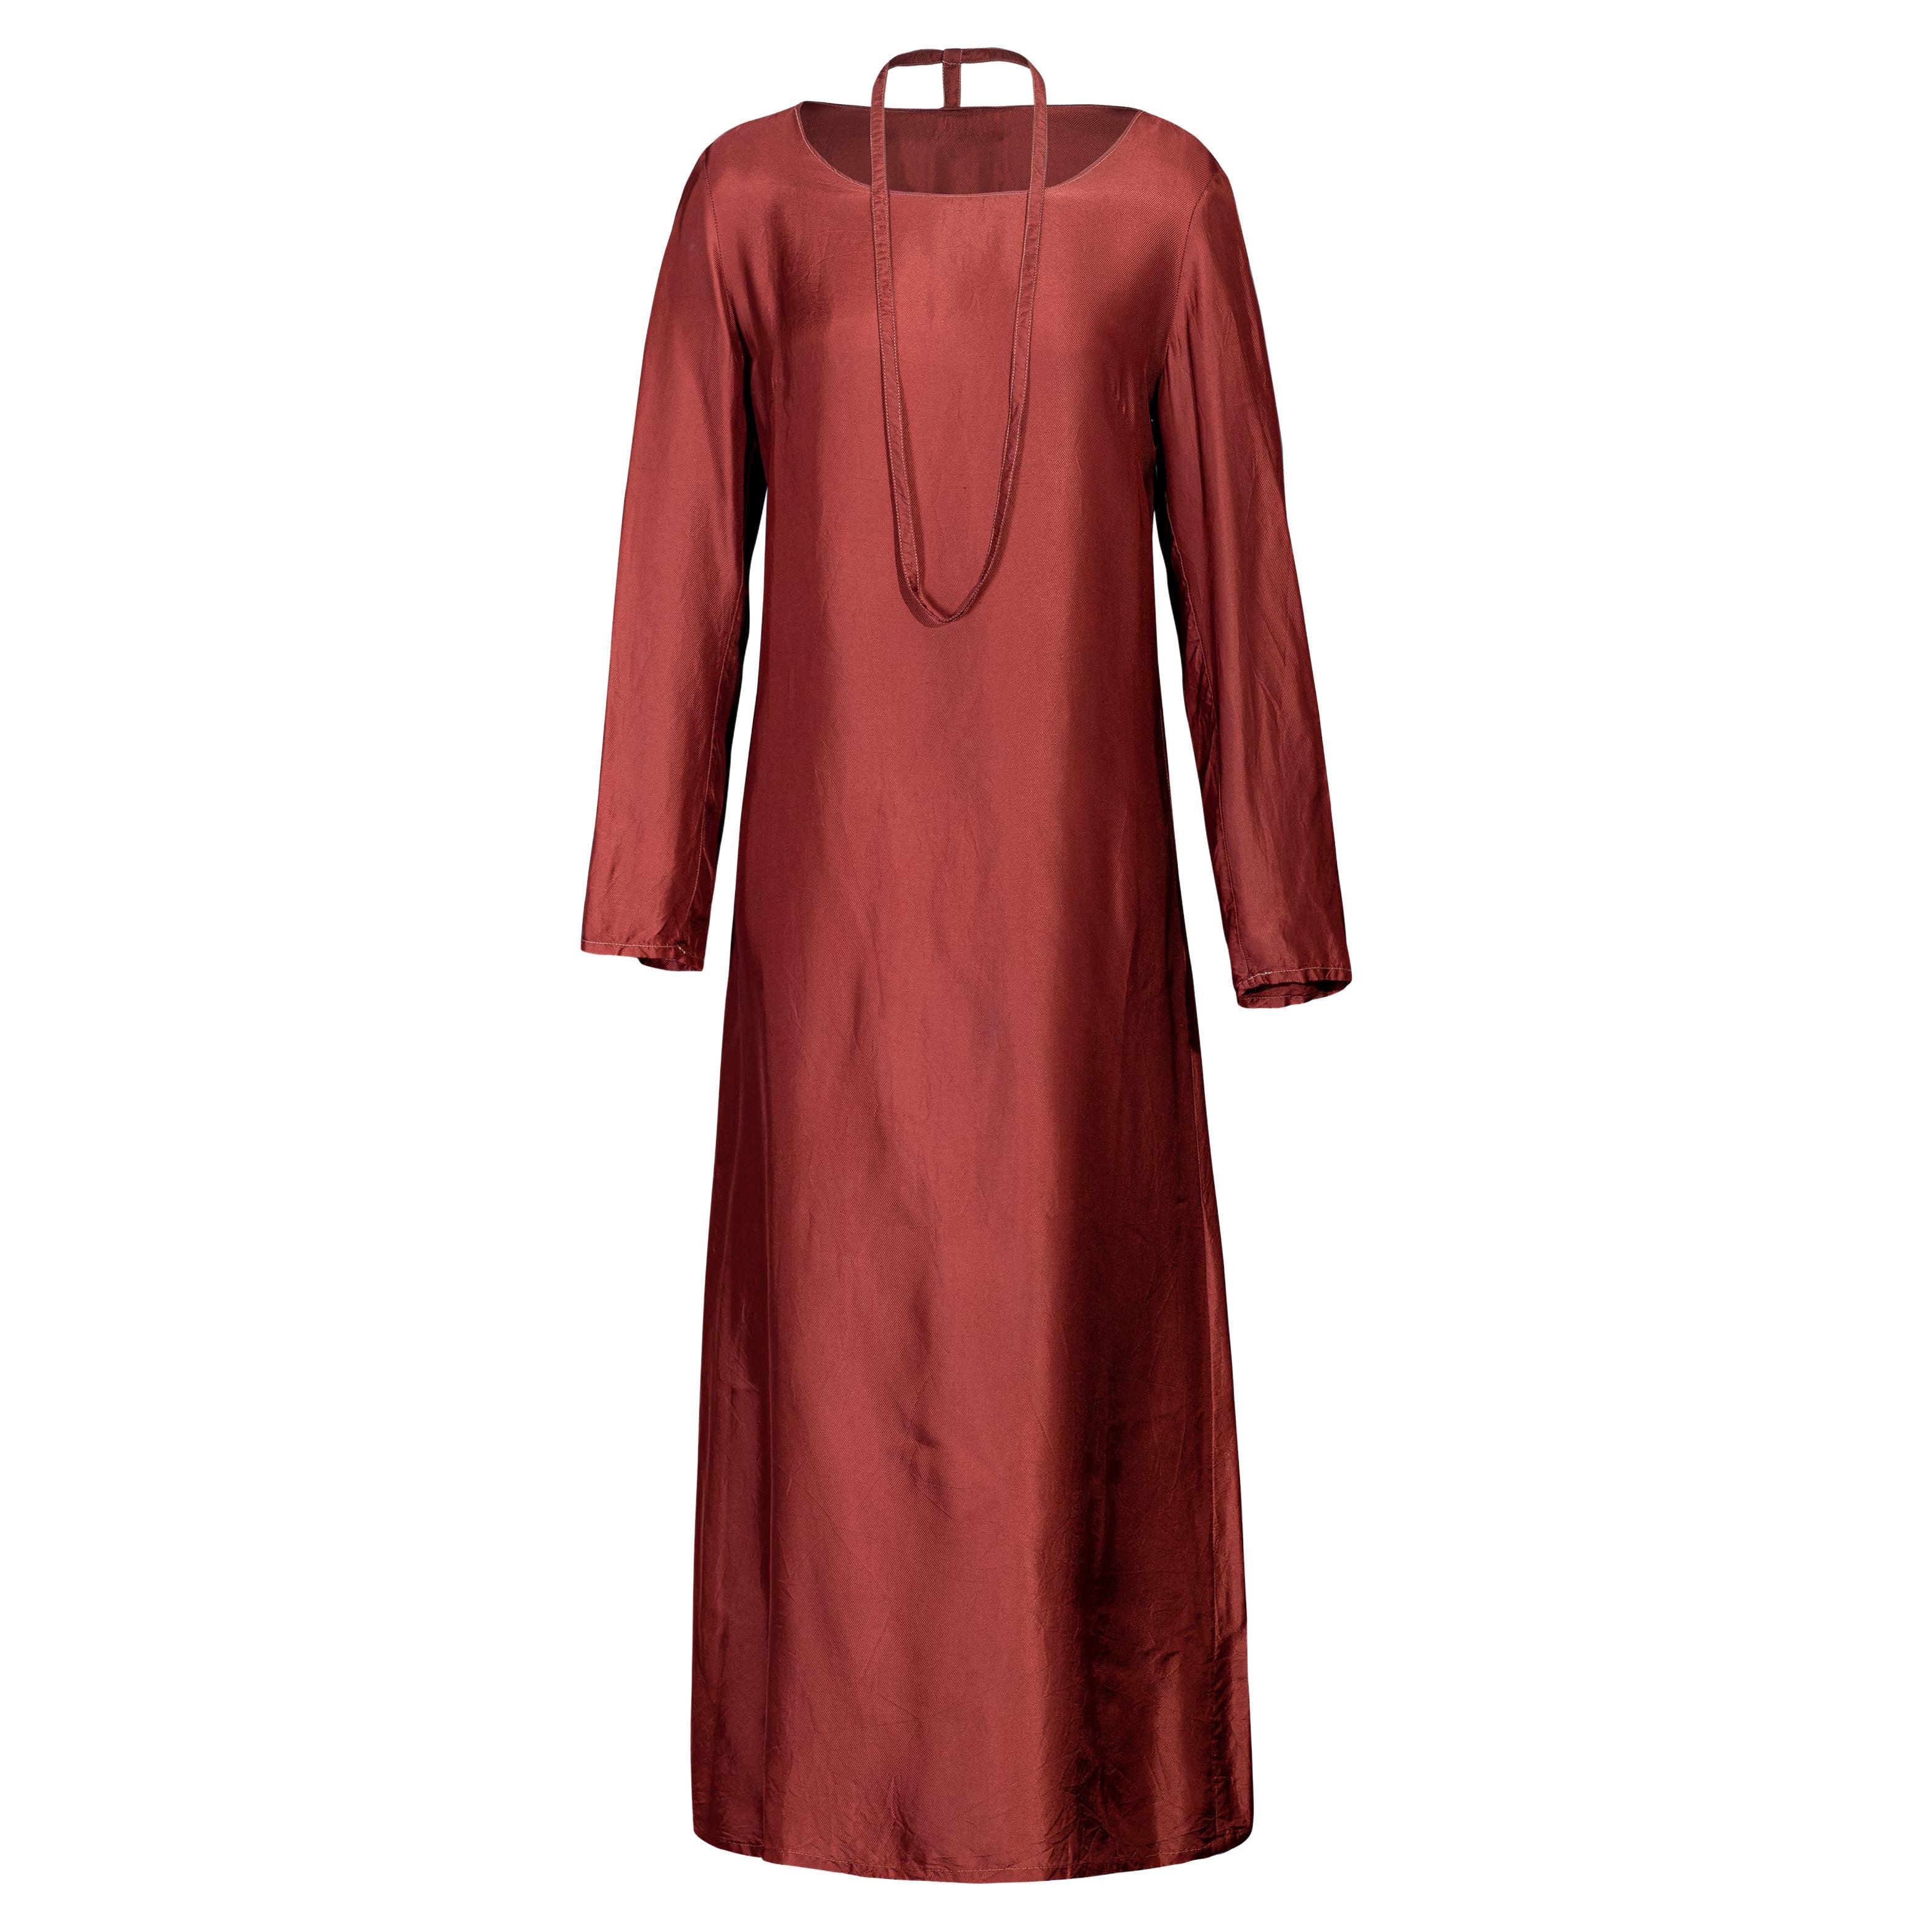 A/W 1999 Maison Martin Margiela Deep Rust Color-way 'Lining' Long Sleeve Dress For Sale